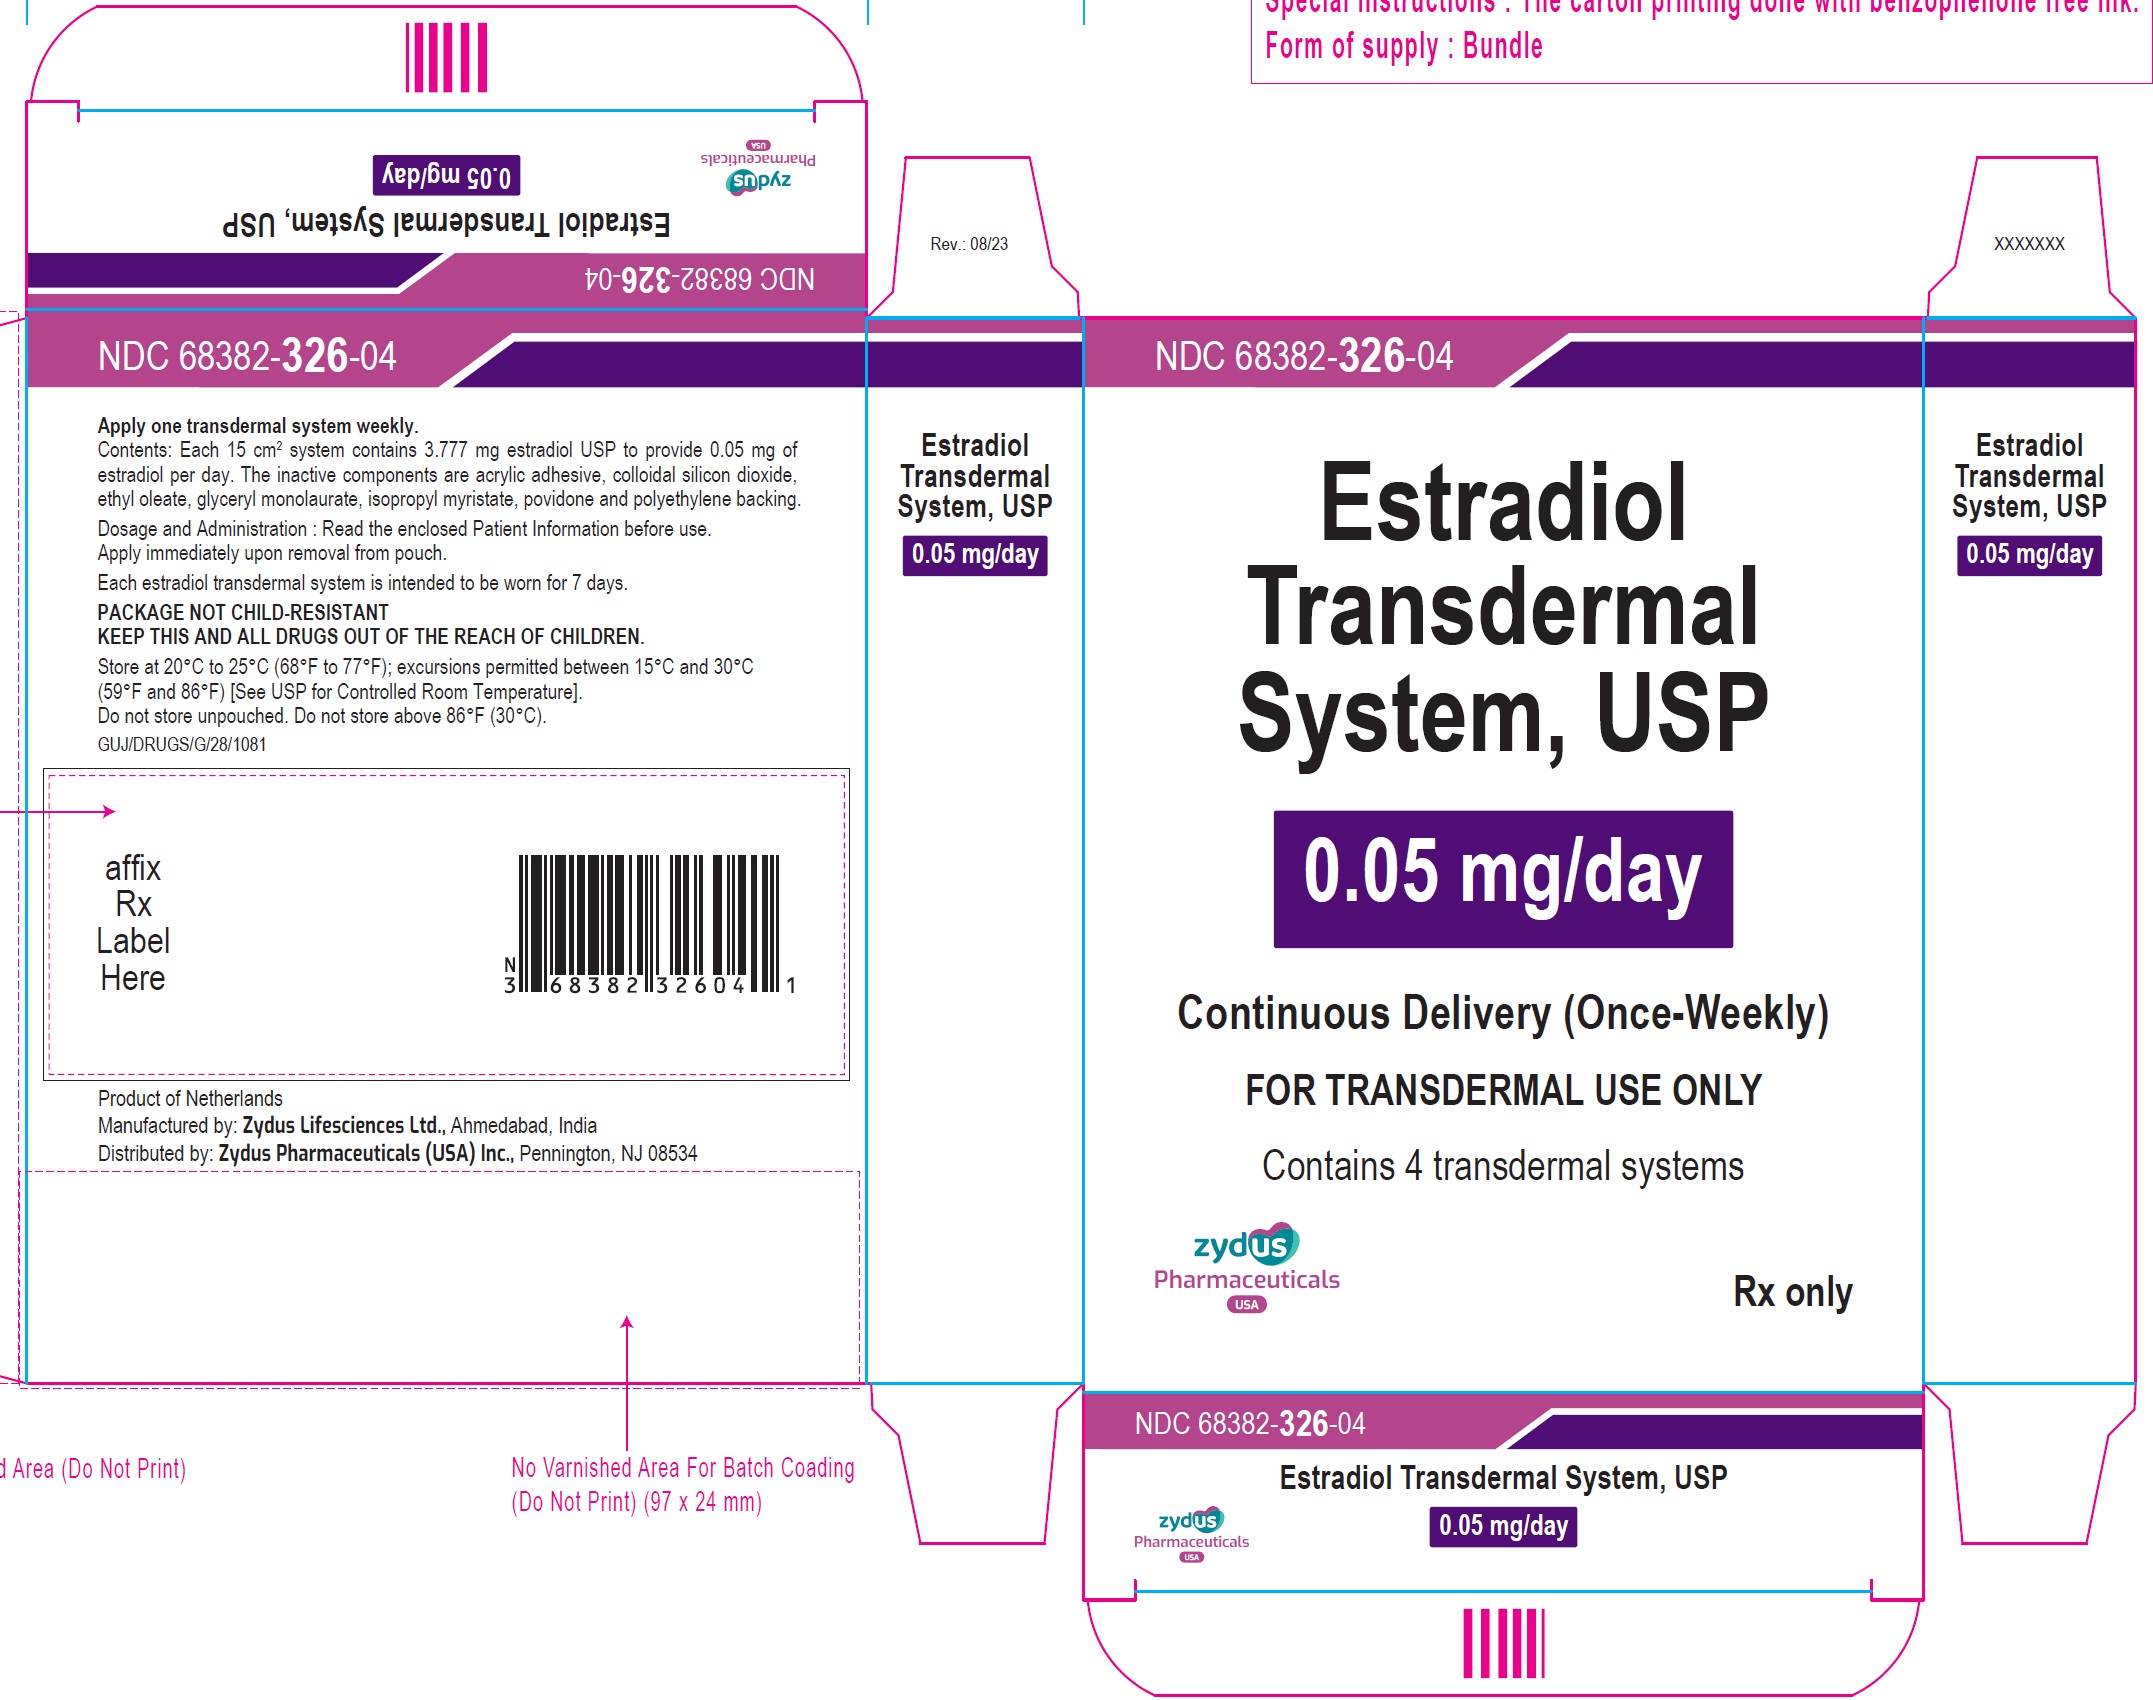 Estradiol Transdermal System, 0.05 mg/day